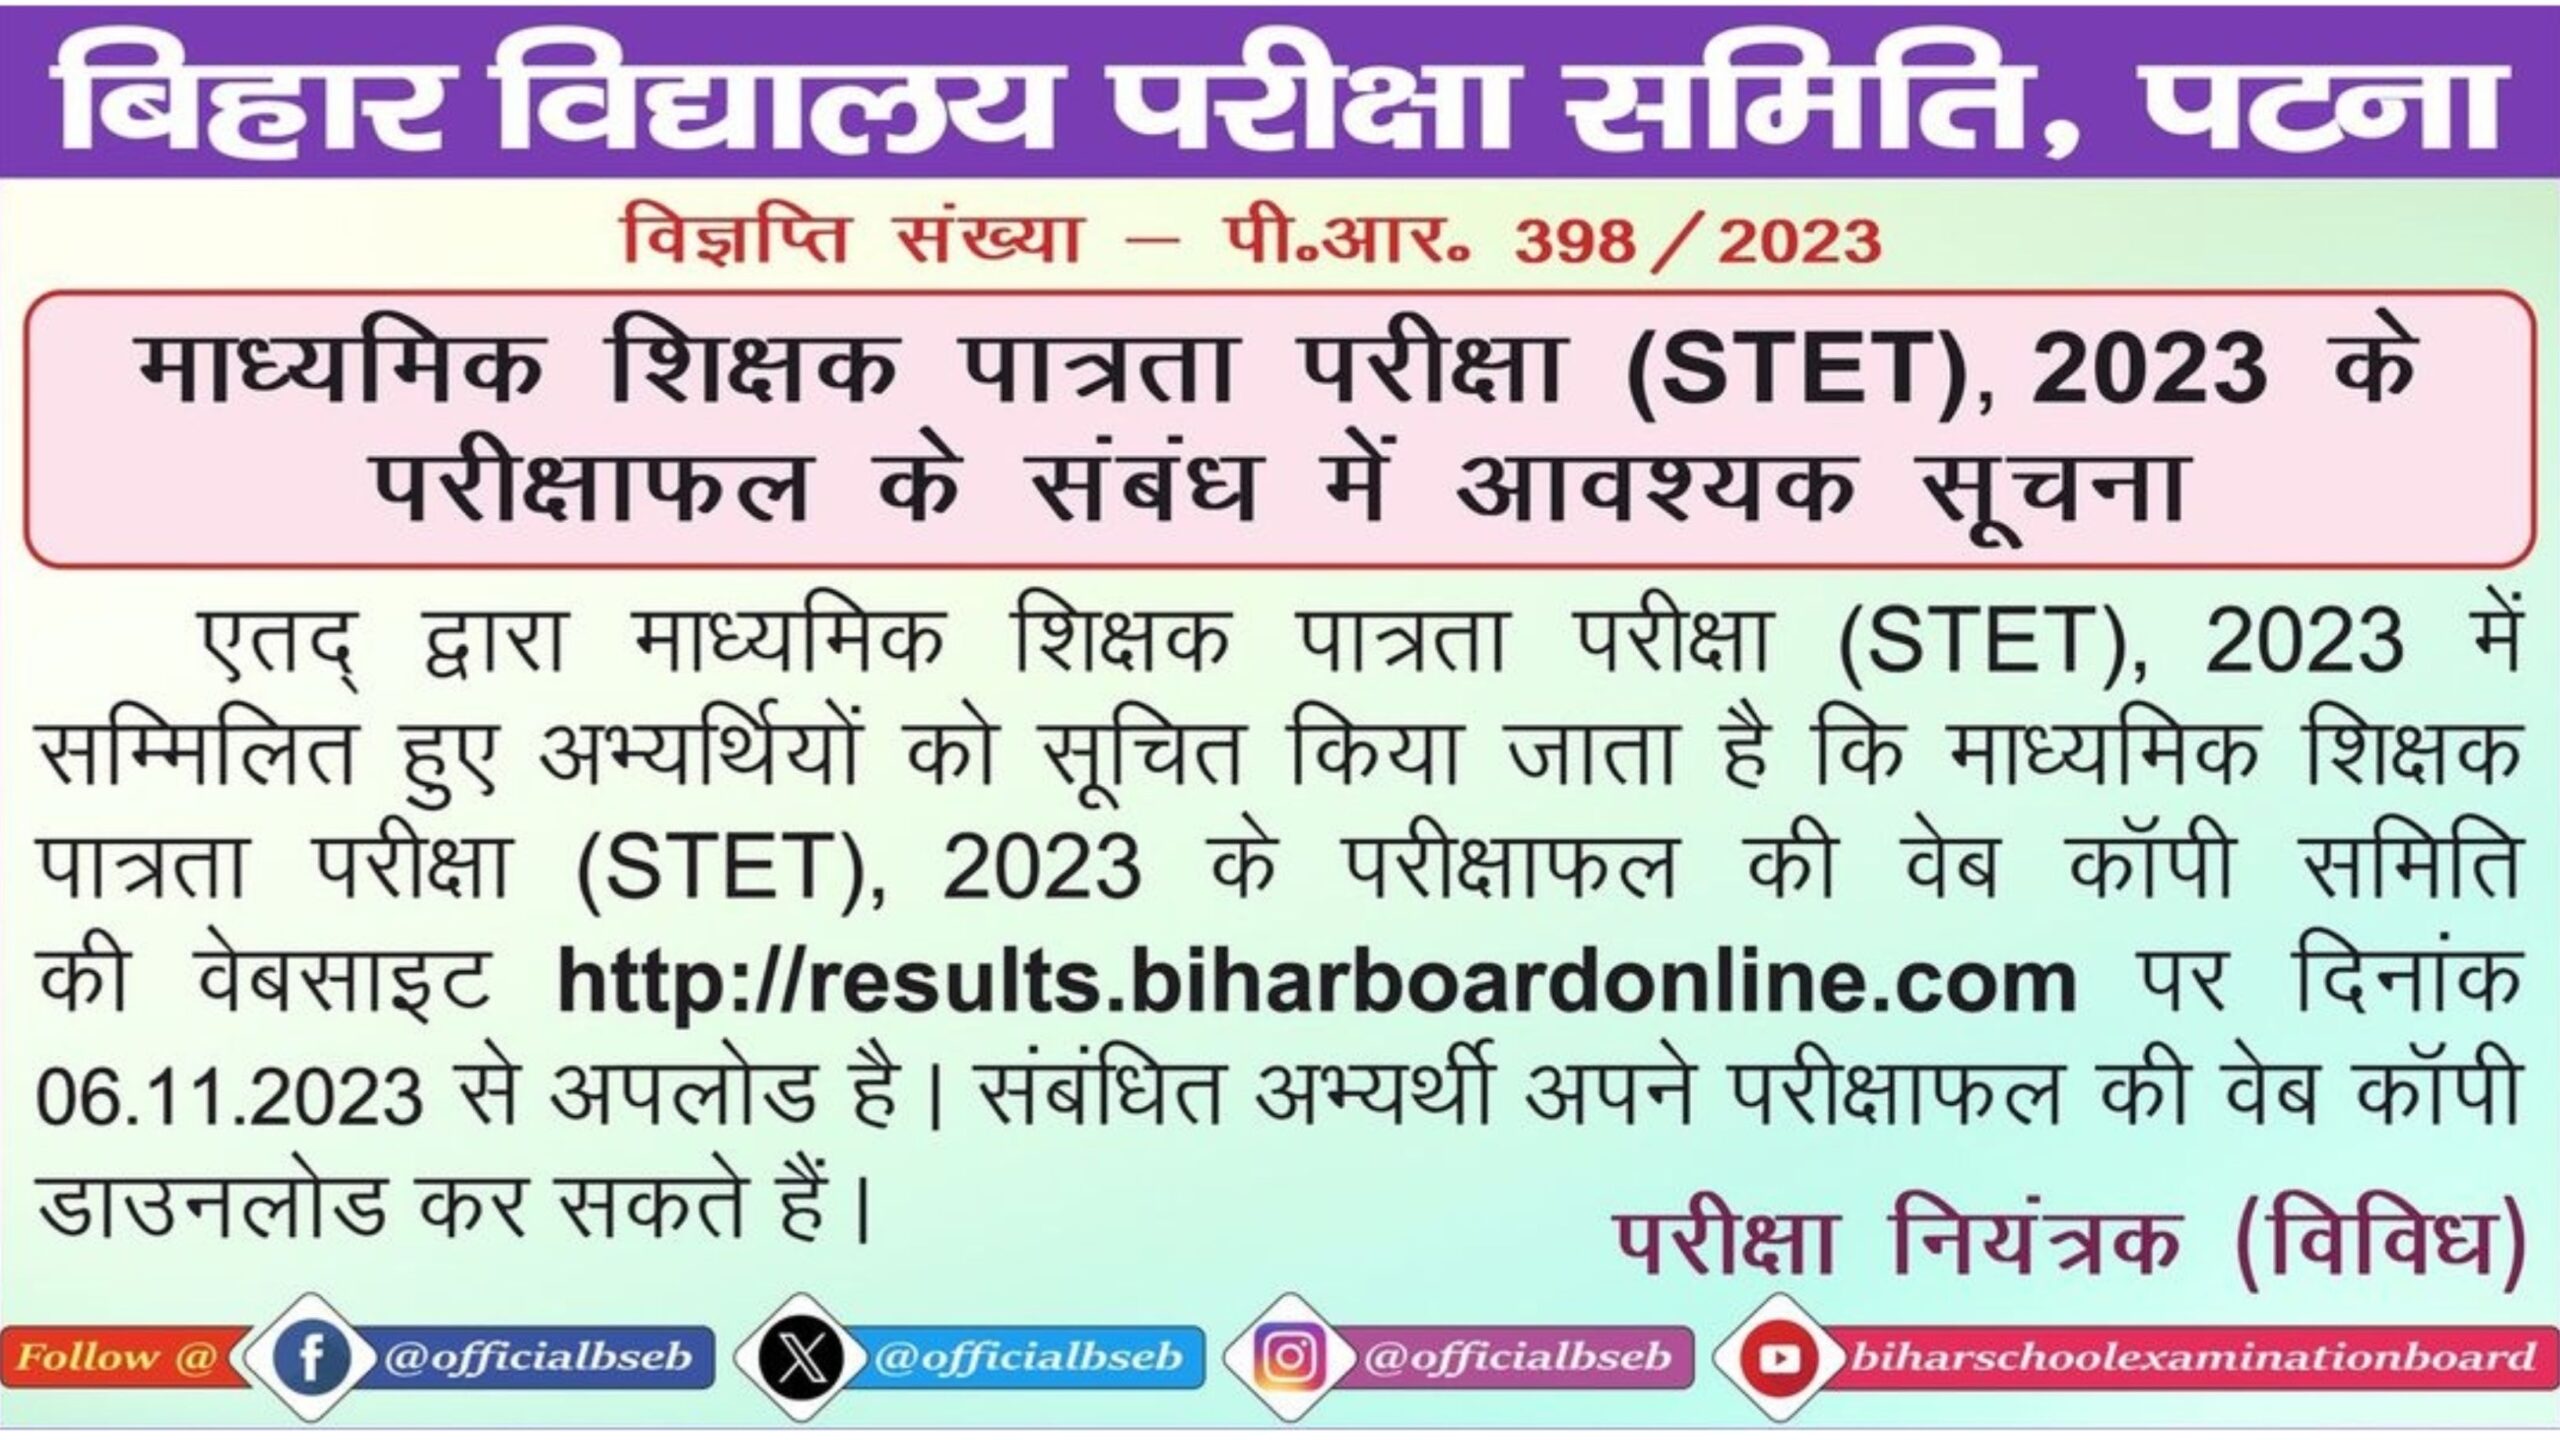 Bihar Board STET Web Copy Download Now Link Active: